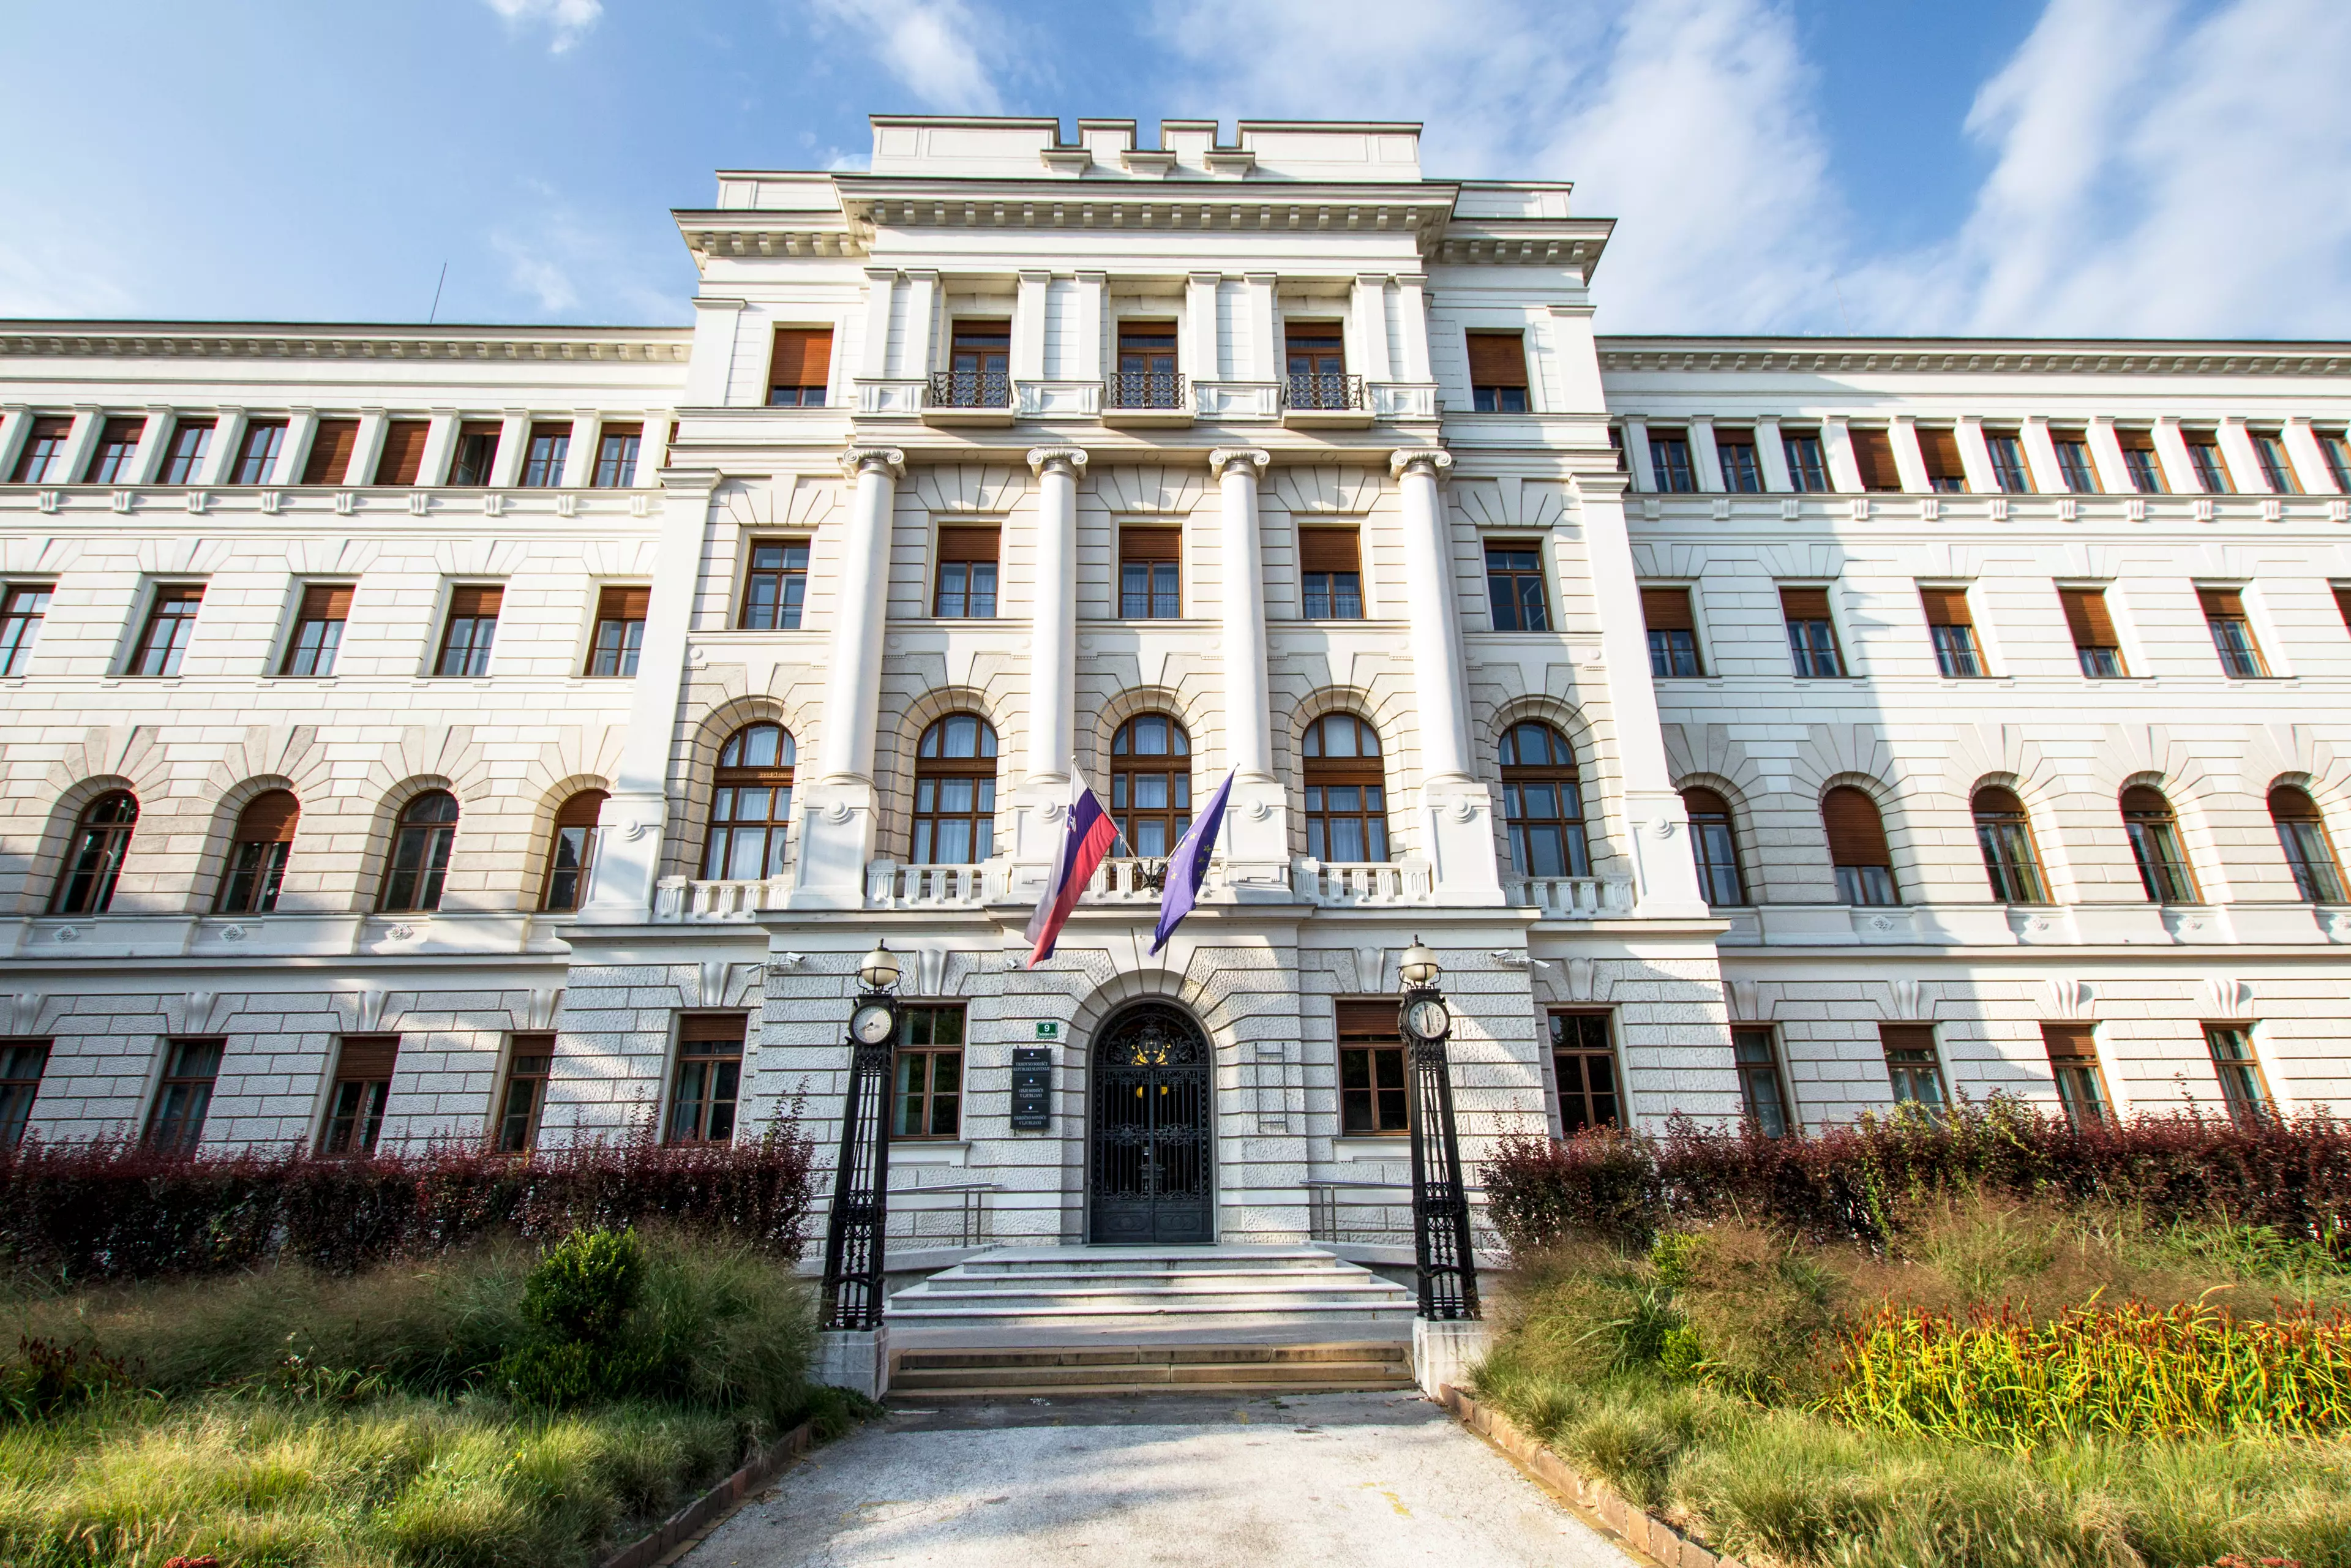 The case was heard at Ljubljana District Court.